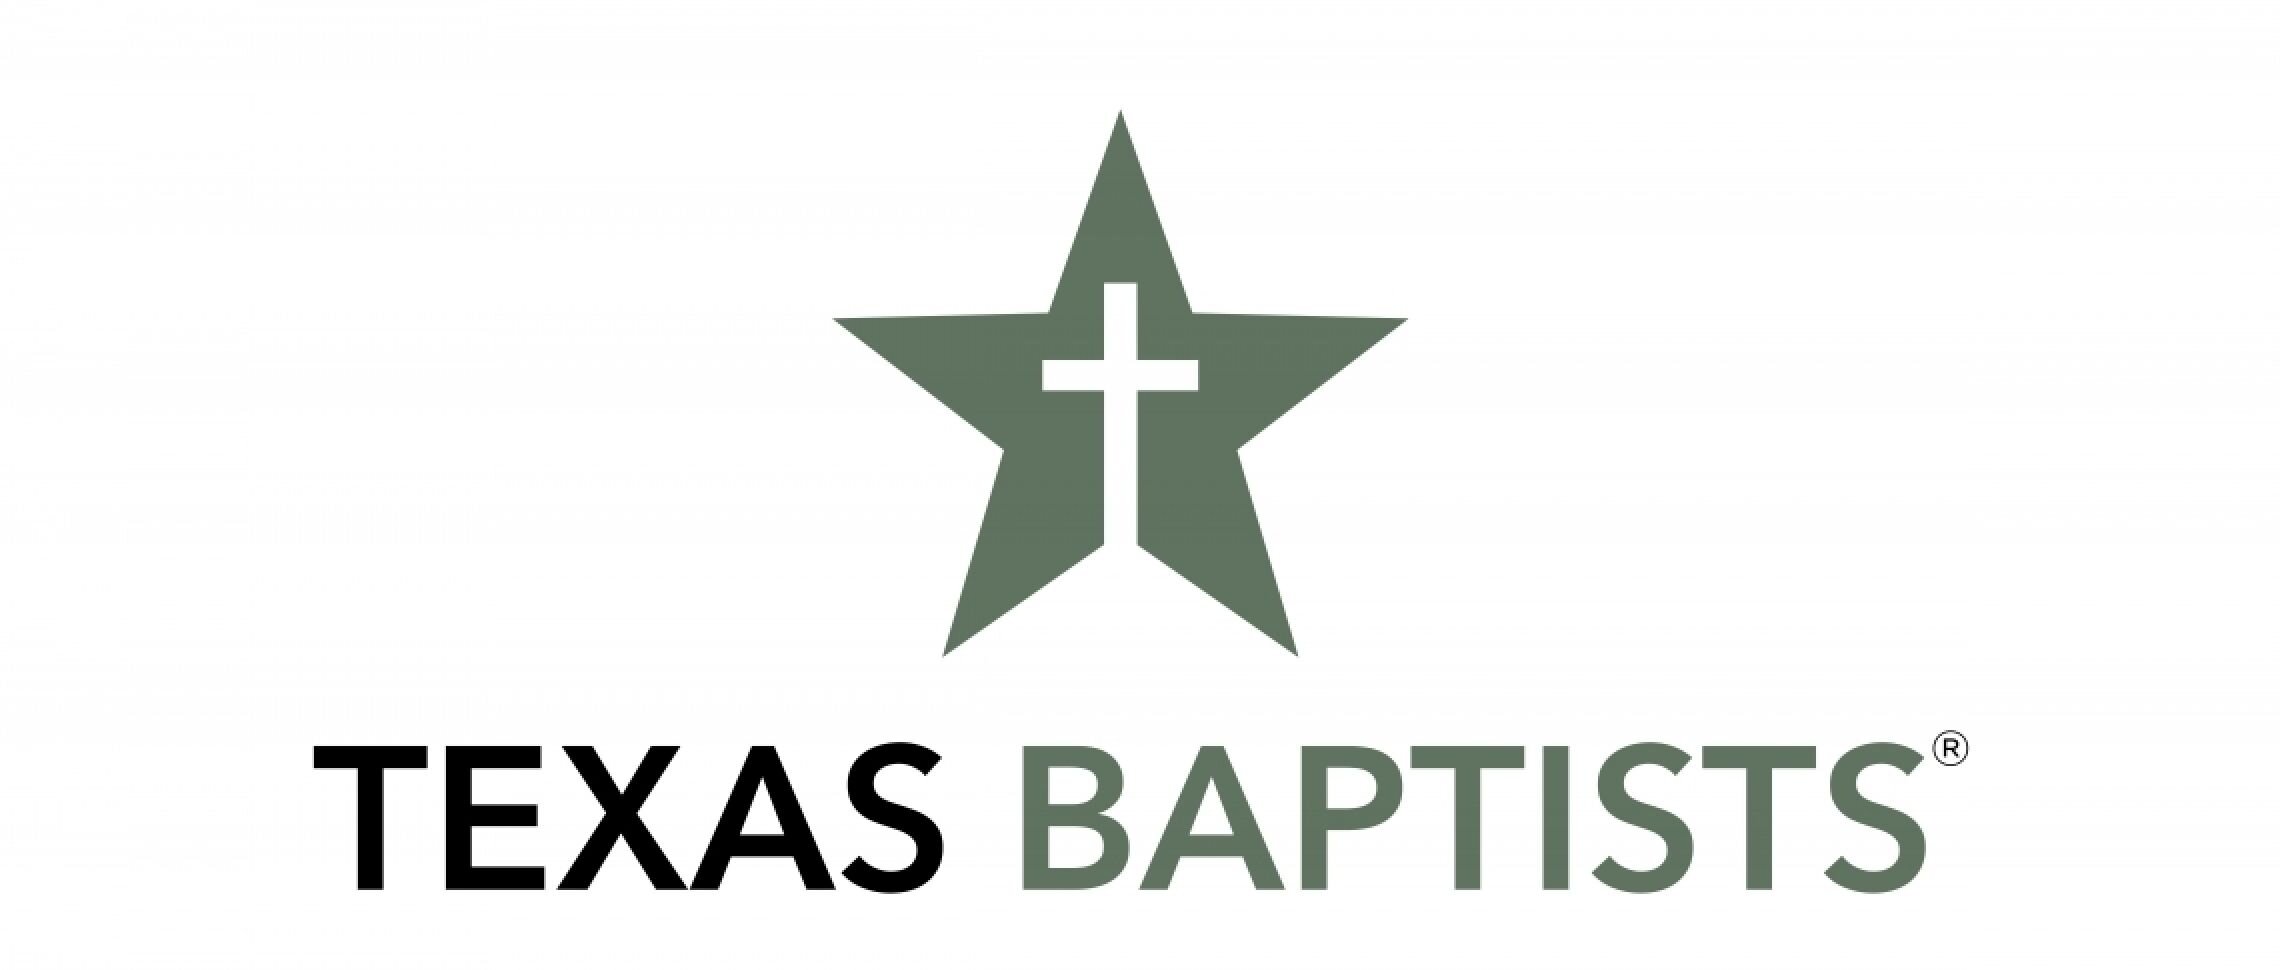 Texas Baptists.jpg